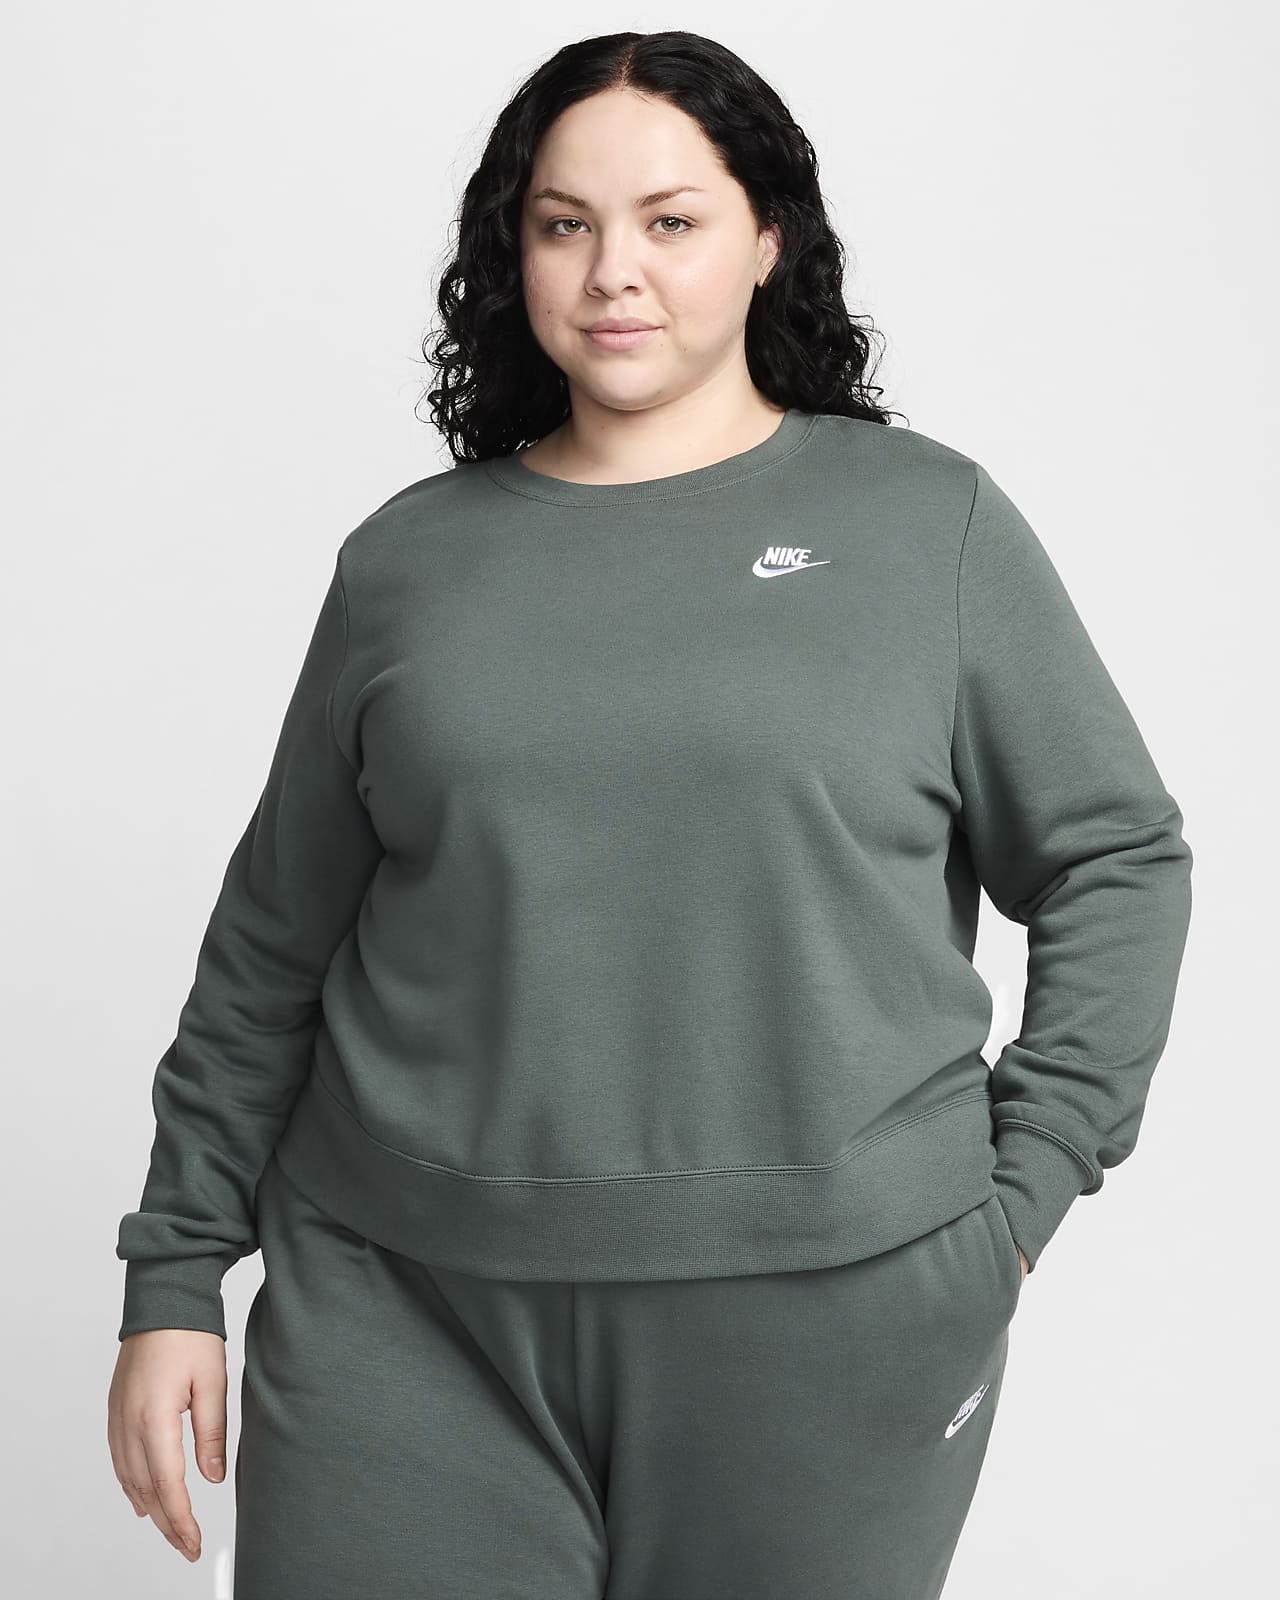 Women's Sweatshirts & Hoodies. Nike IL